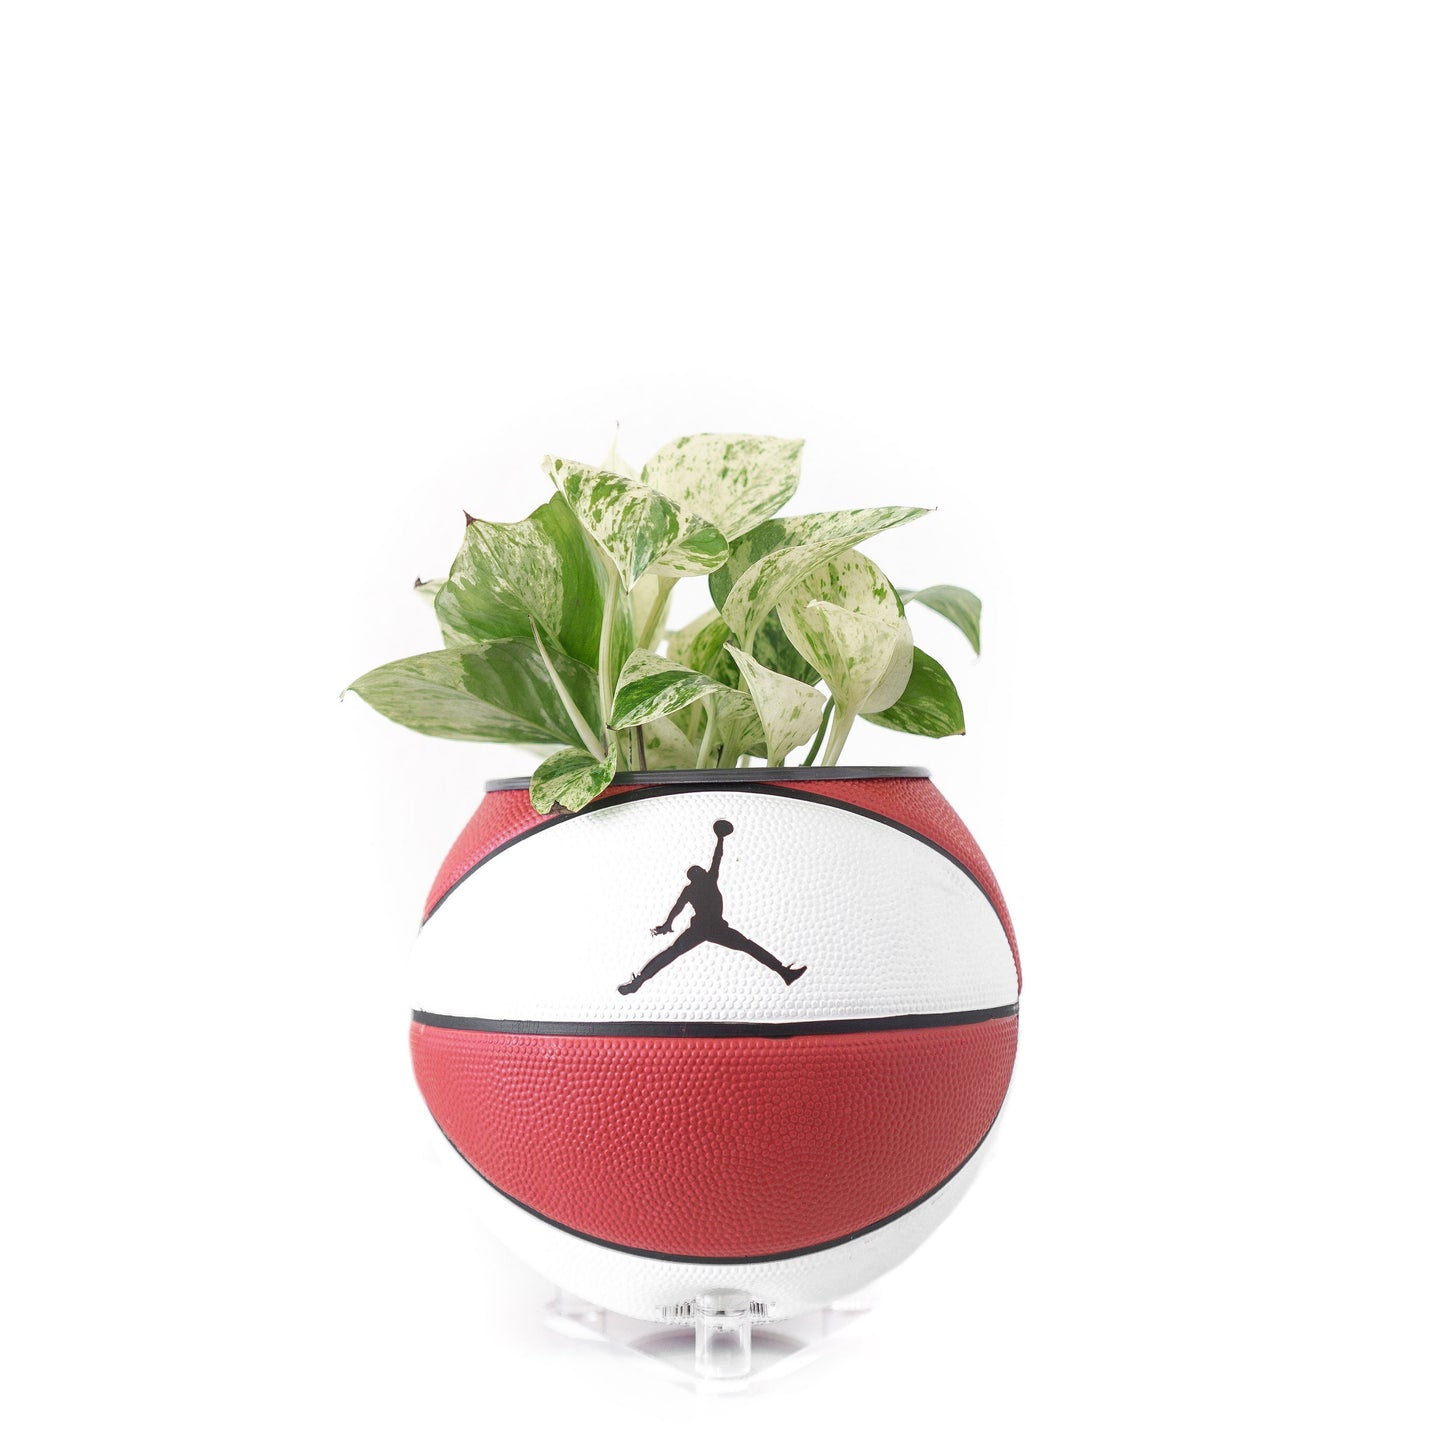 plntrs - Jordan Skills Mini Basketball Planter with stand